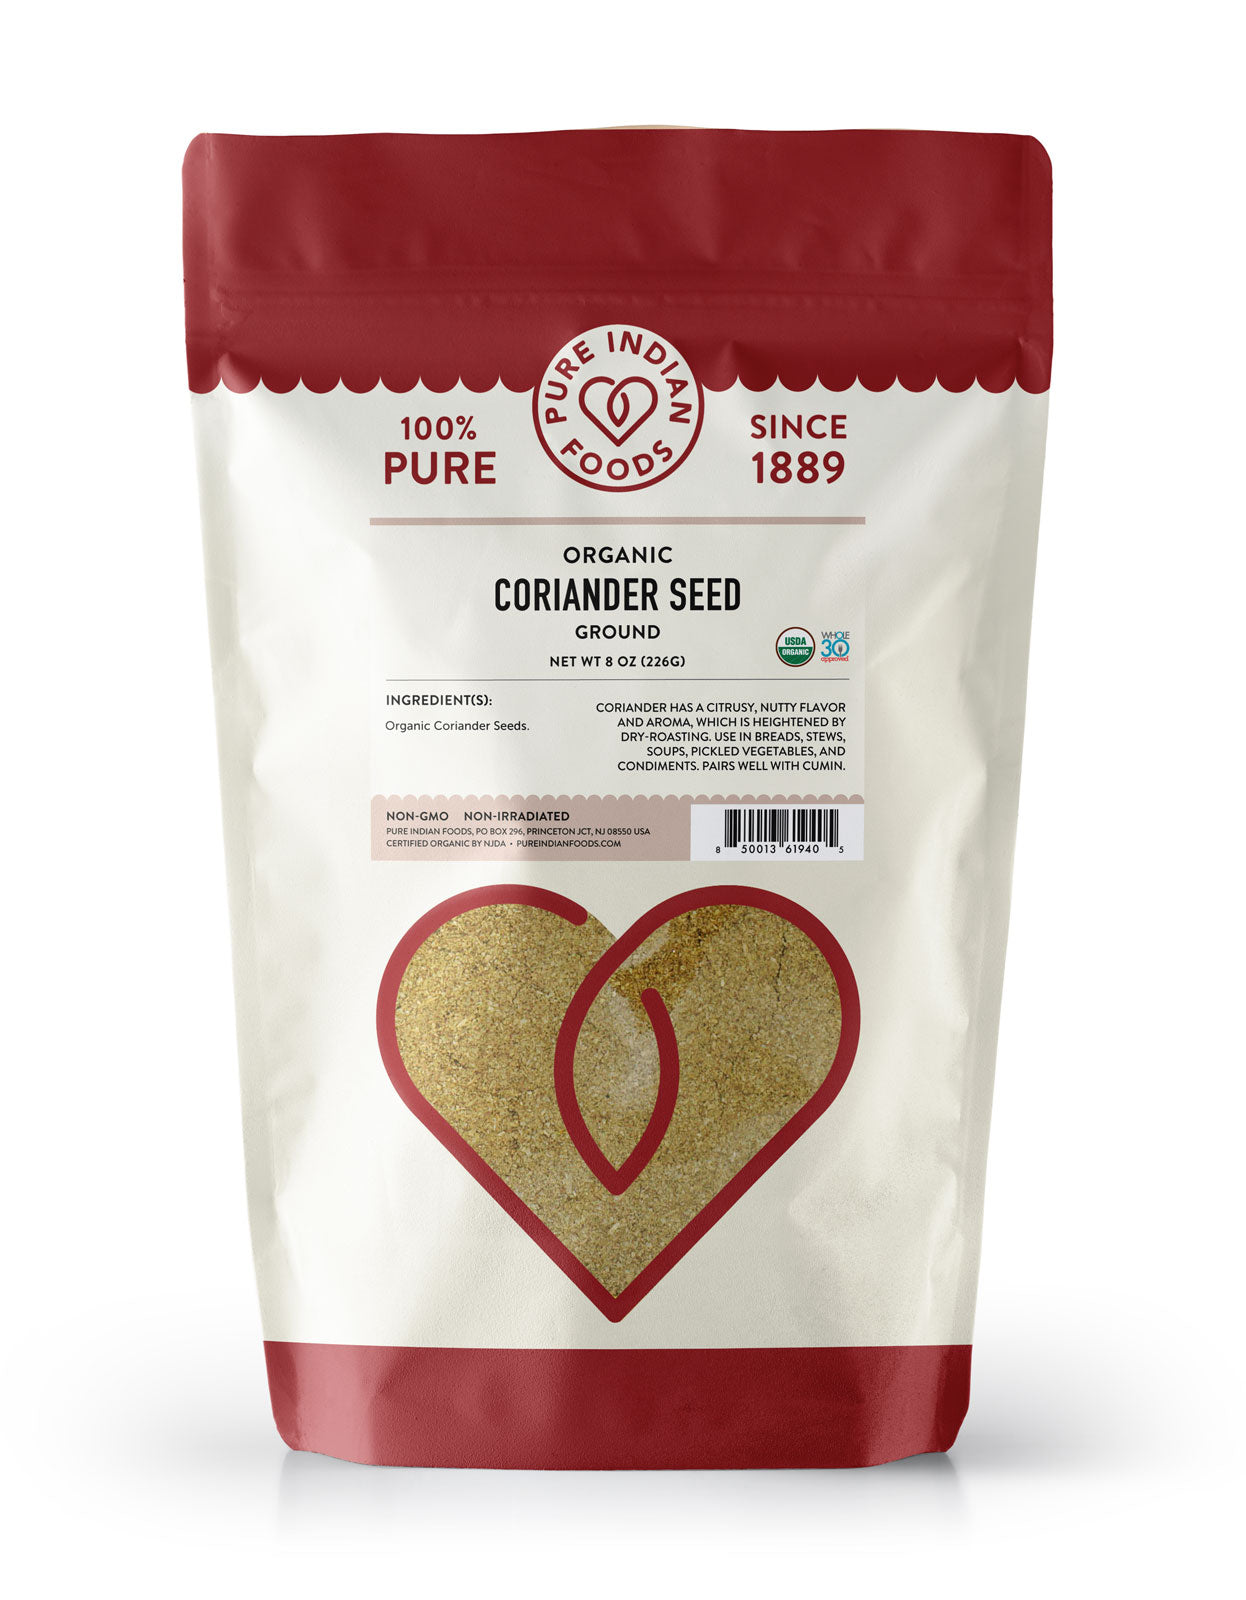 8 oz bag of Organic Ground Coriander Seasoning from Pure Indian Foods